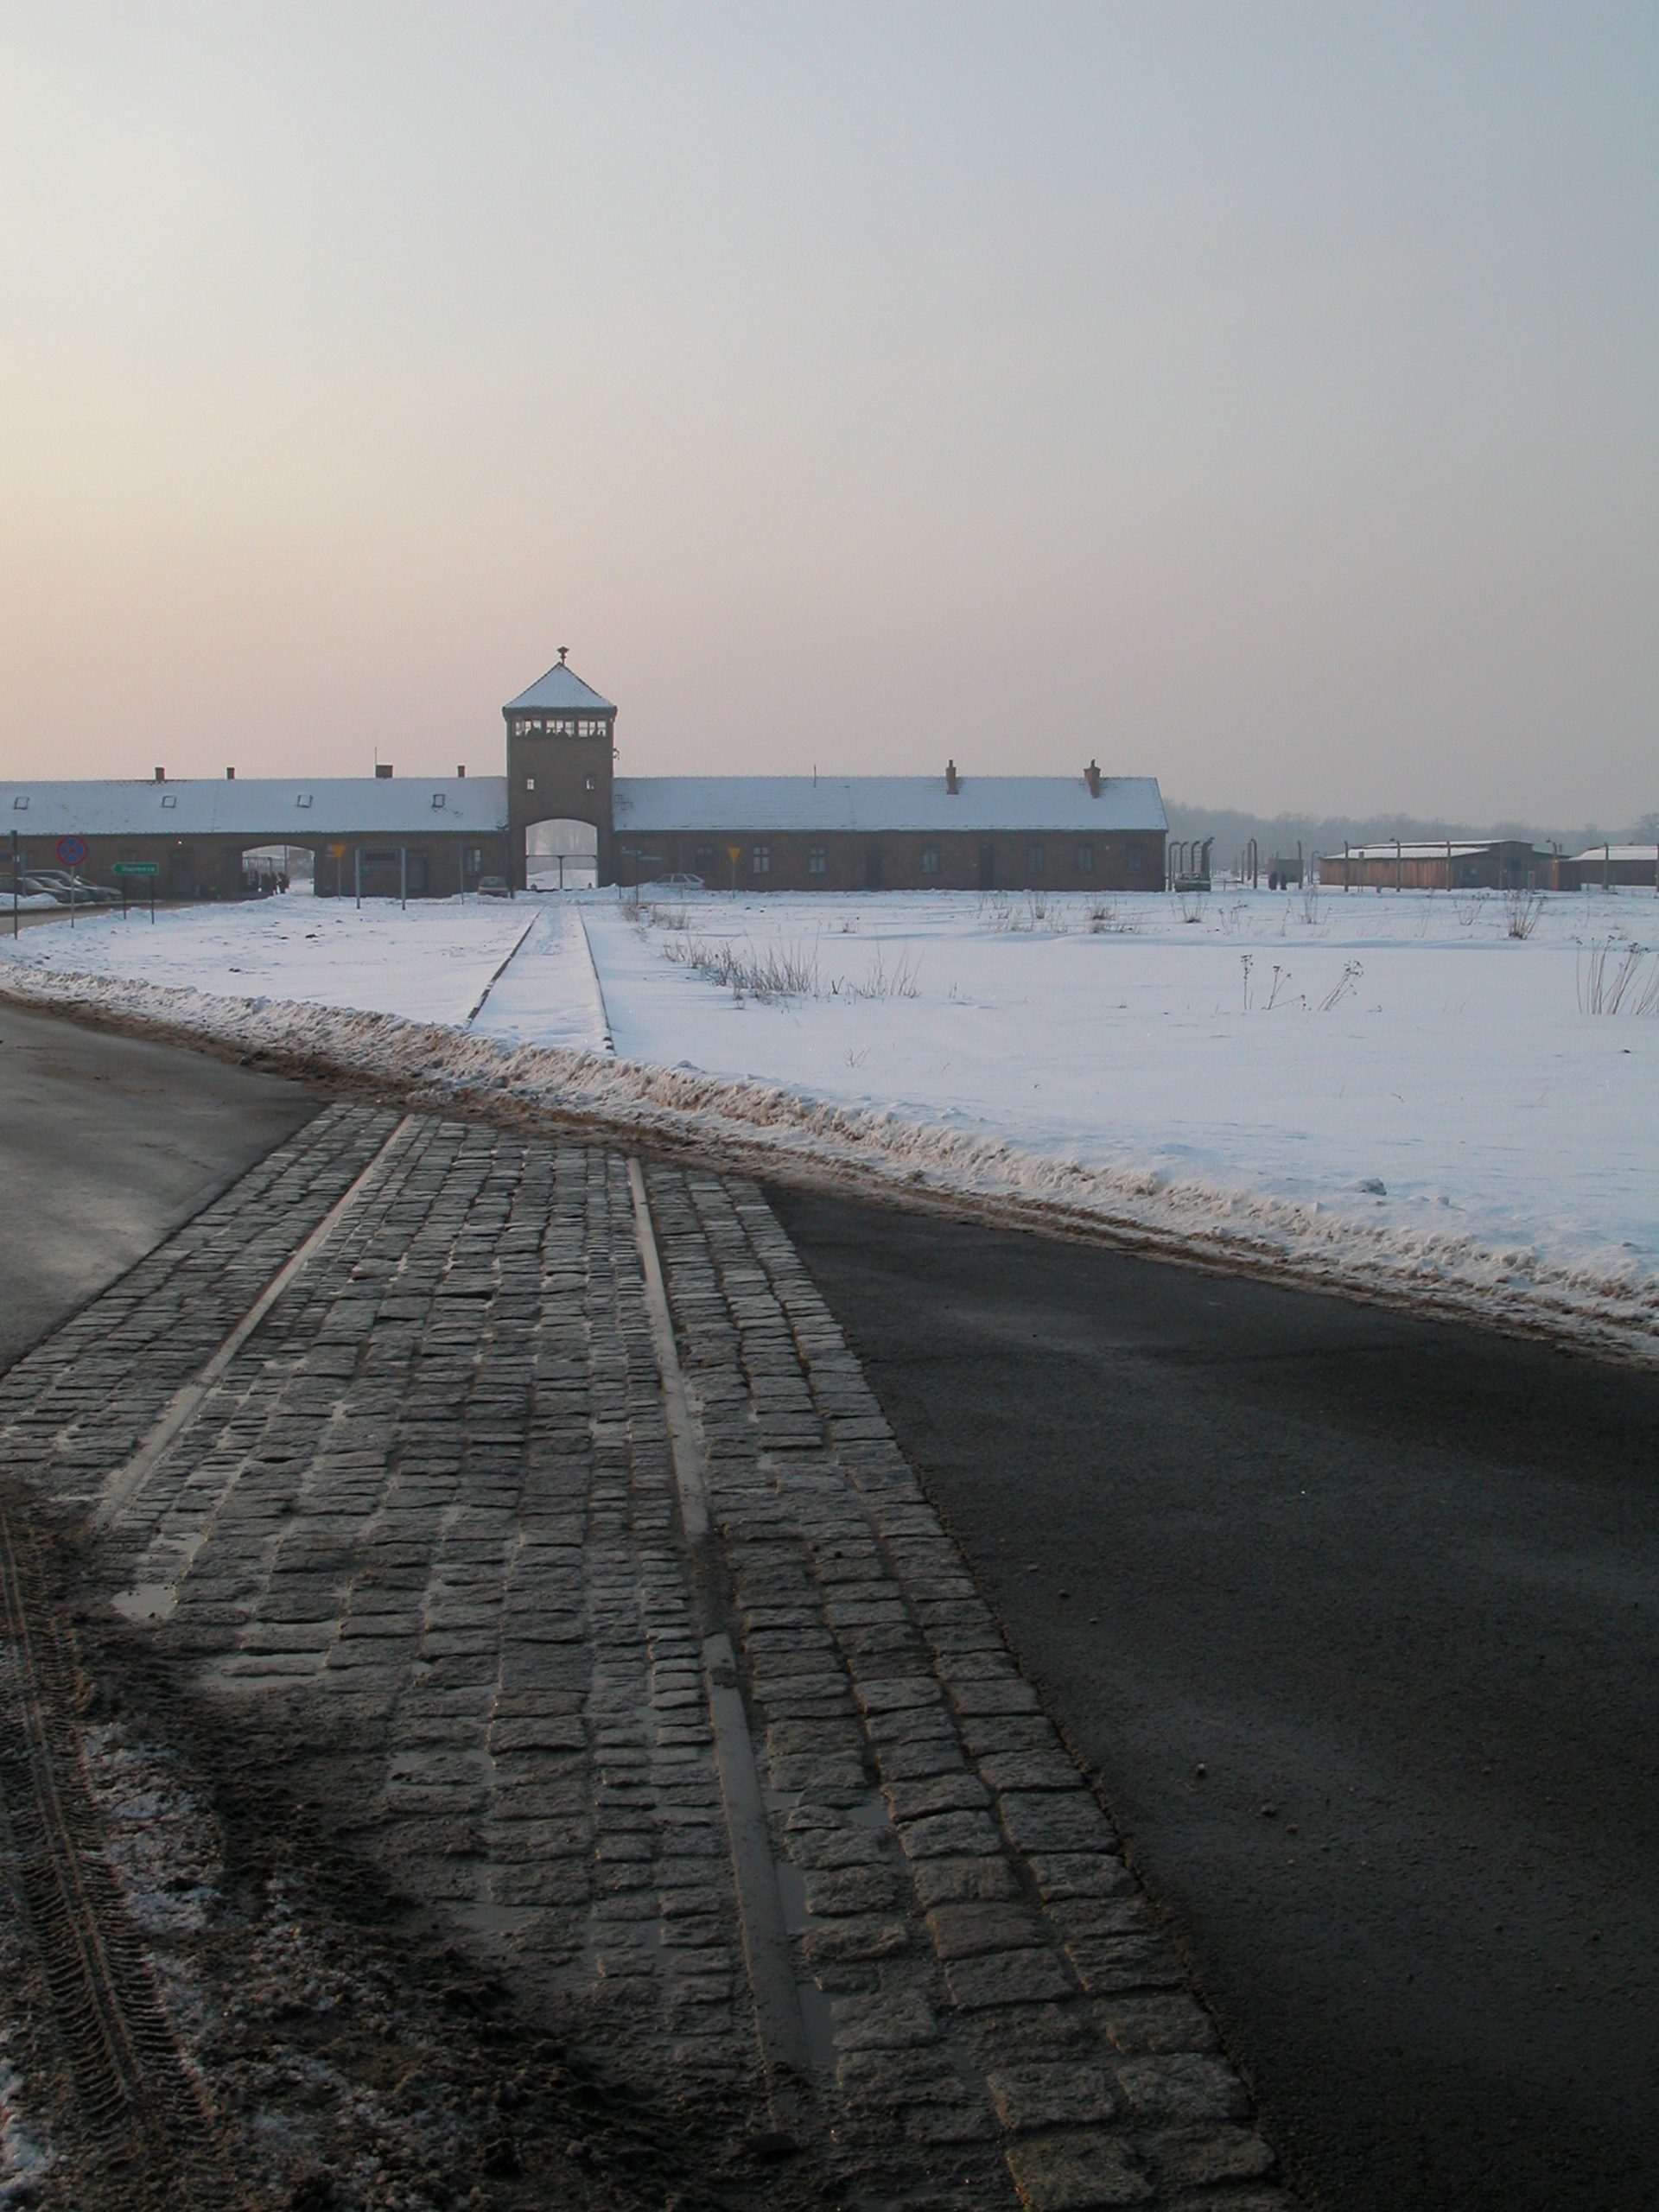 The road to Auschwitz